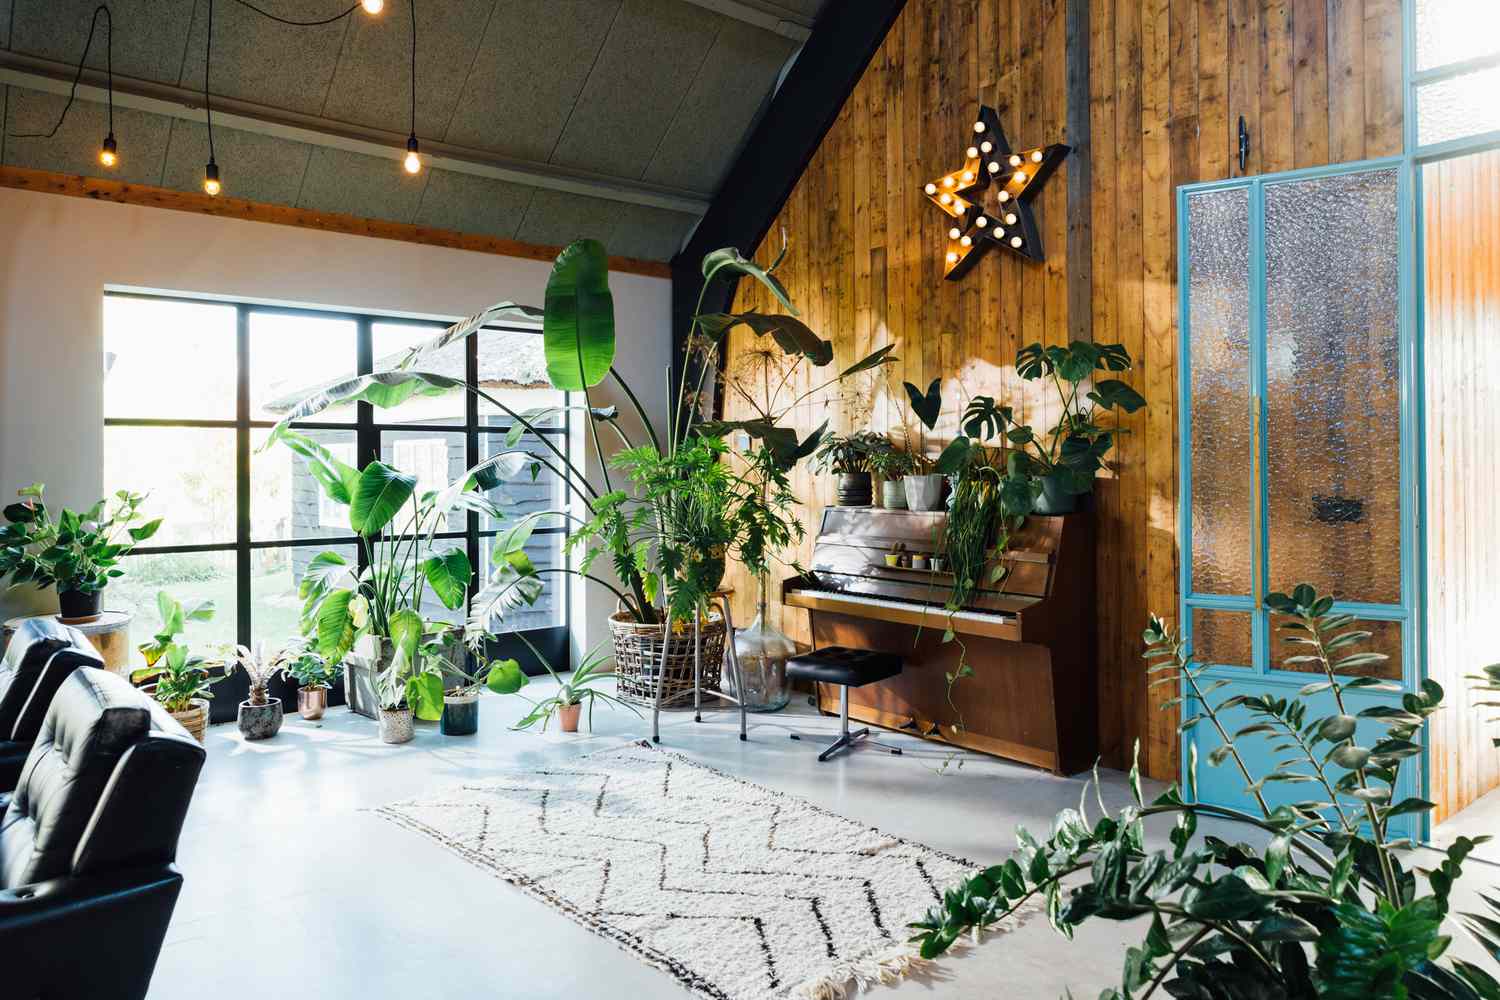 Midcentury modern scandinavian eco lodgle like interior with a lot of green plants and barn wood walls. Piano visível.